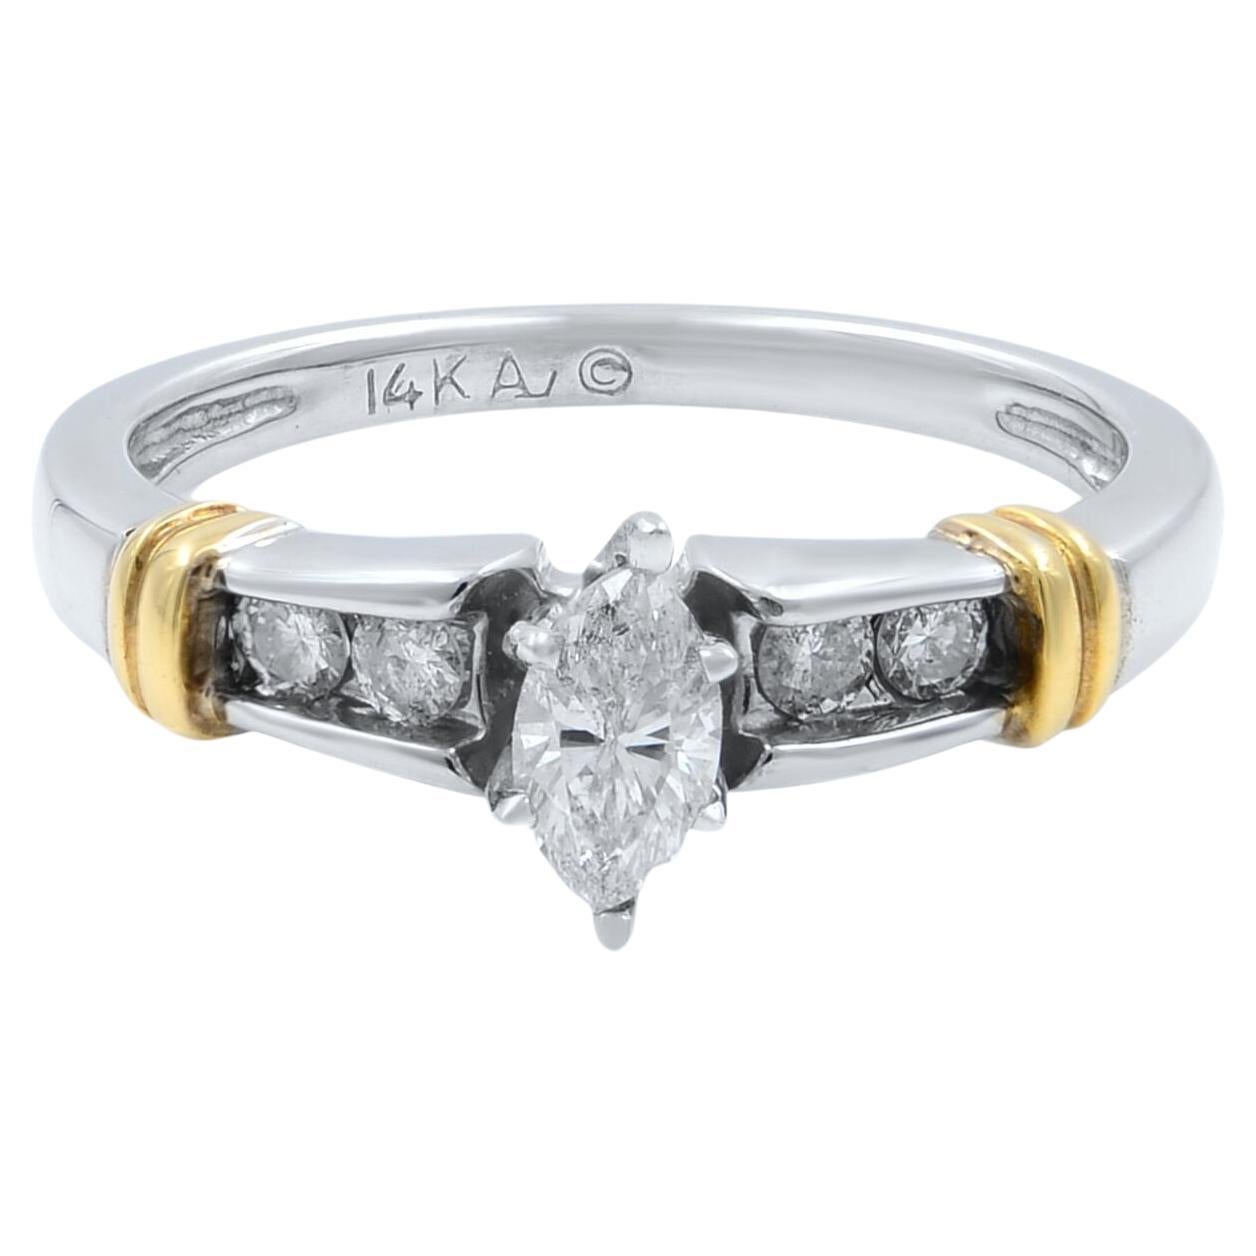 Rachel Koen Diamond Womens Engagement Ring 14K White & Yellow Gold 0.50cttw SZ 7 For Sale